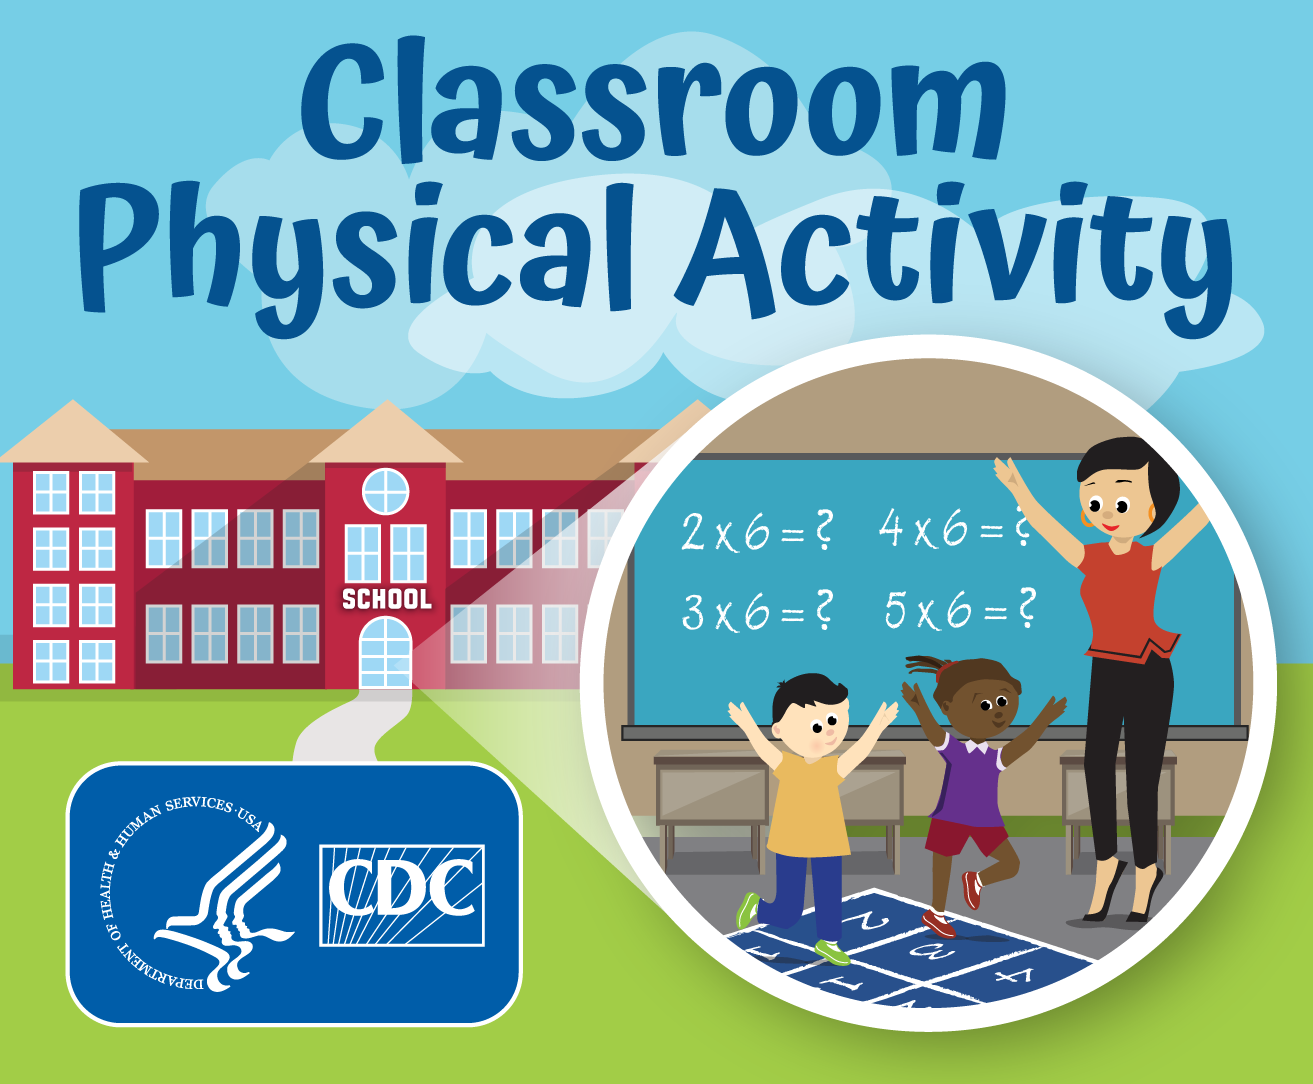 CDC Classroom Physical Activity Web Badge